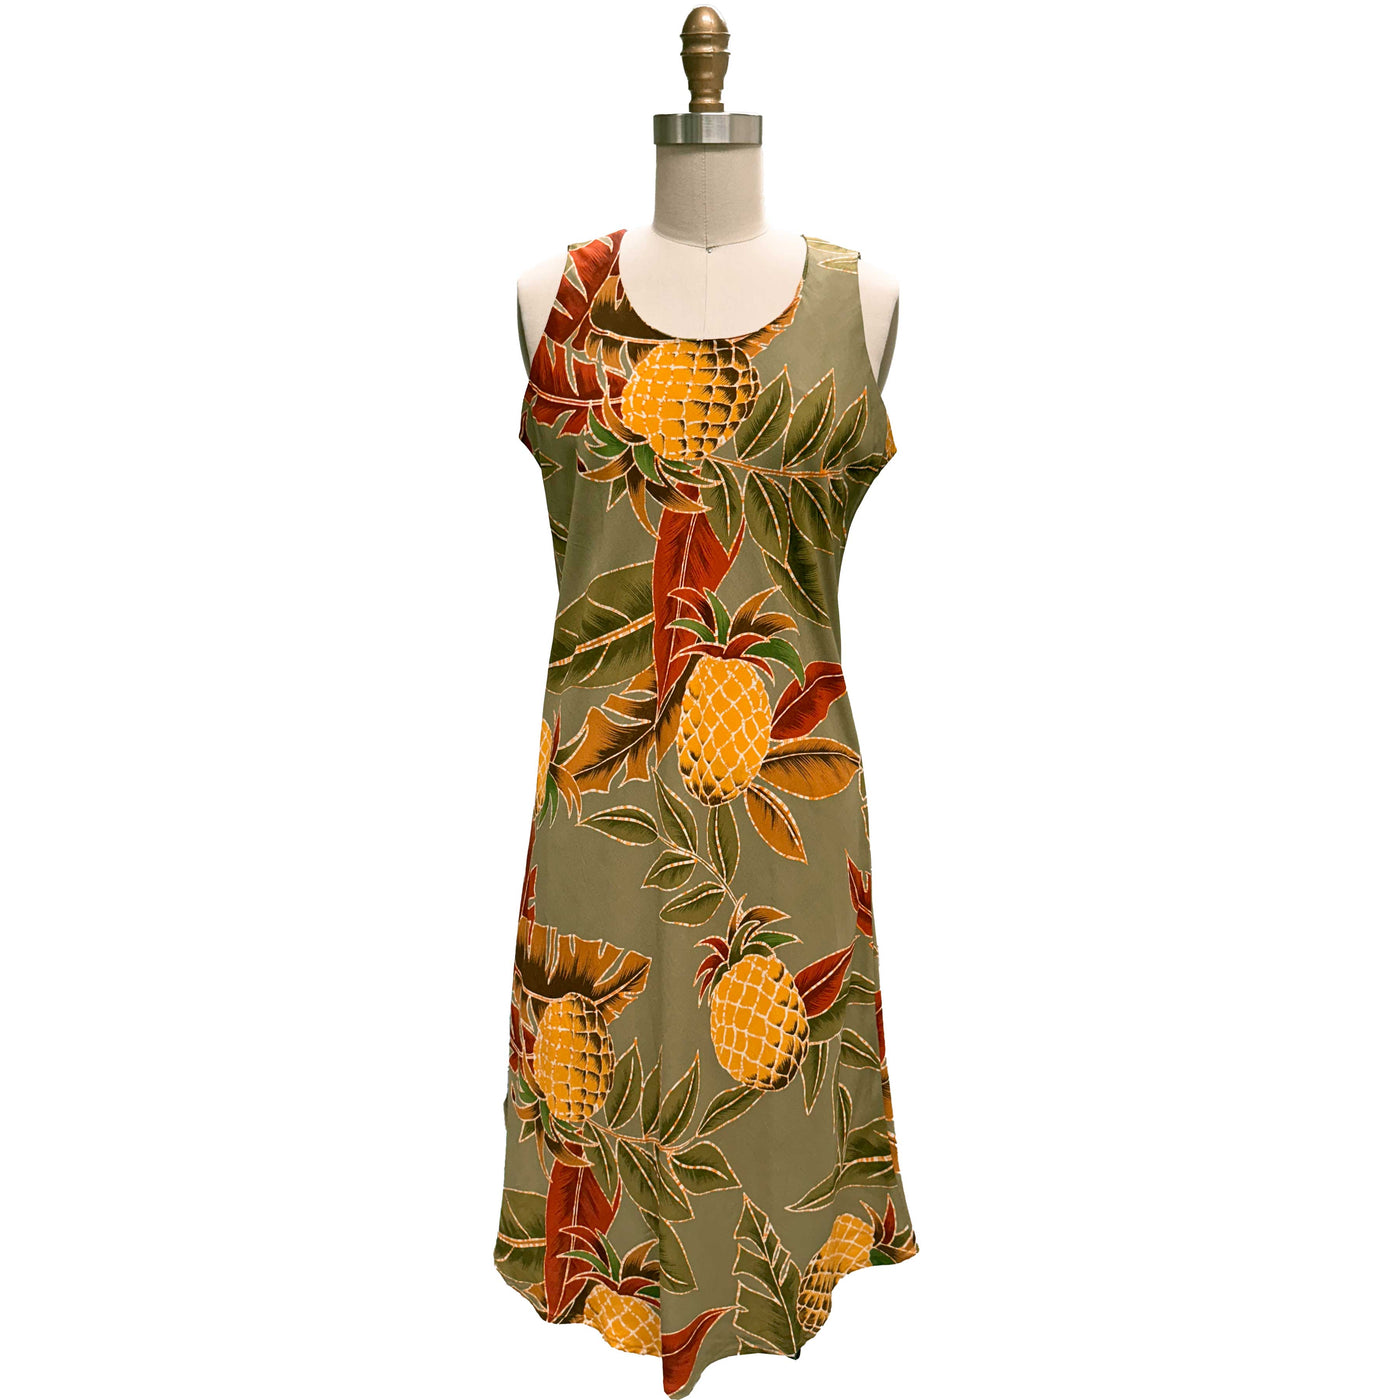 Retro Pineapple Tank Dress - Olive